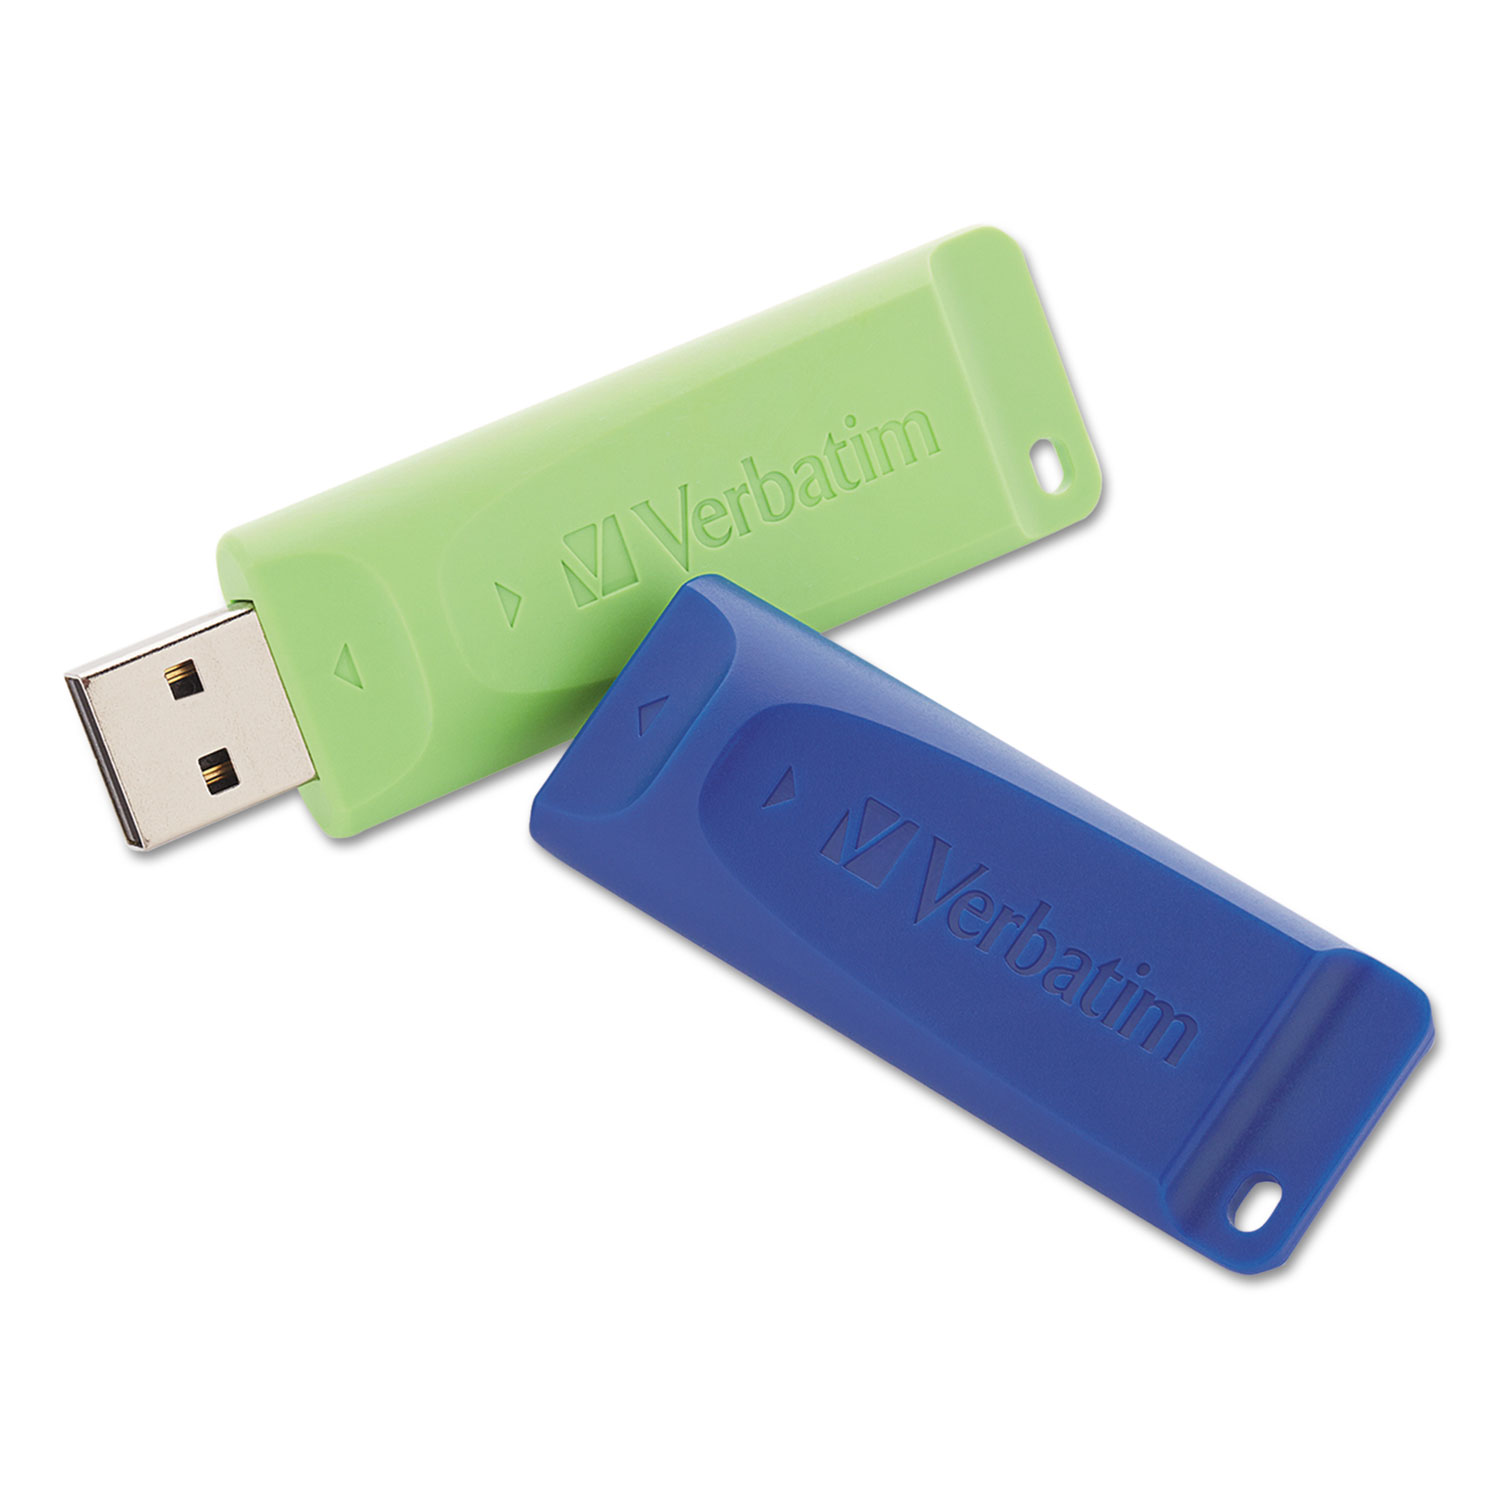 Store n Go USB 2.0 Flash Drive, 32GB, Blue/Green, 2 Pack